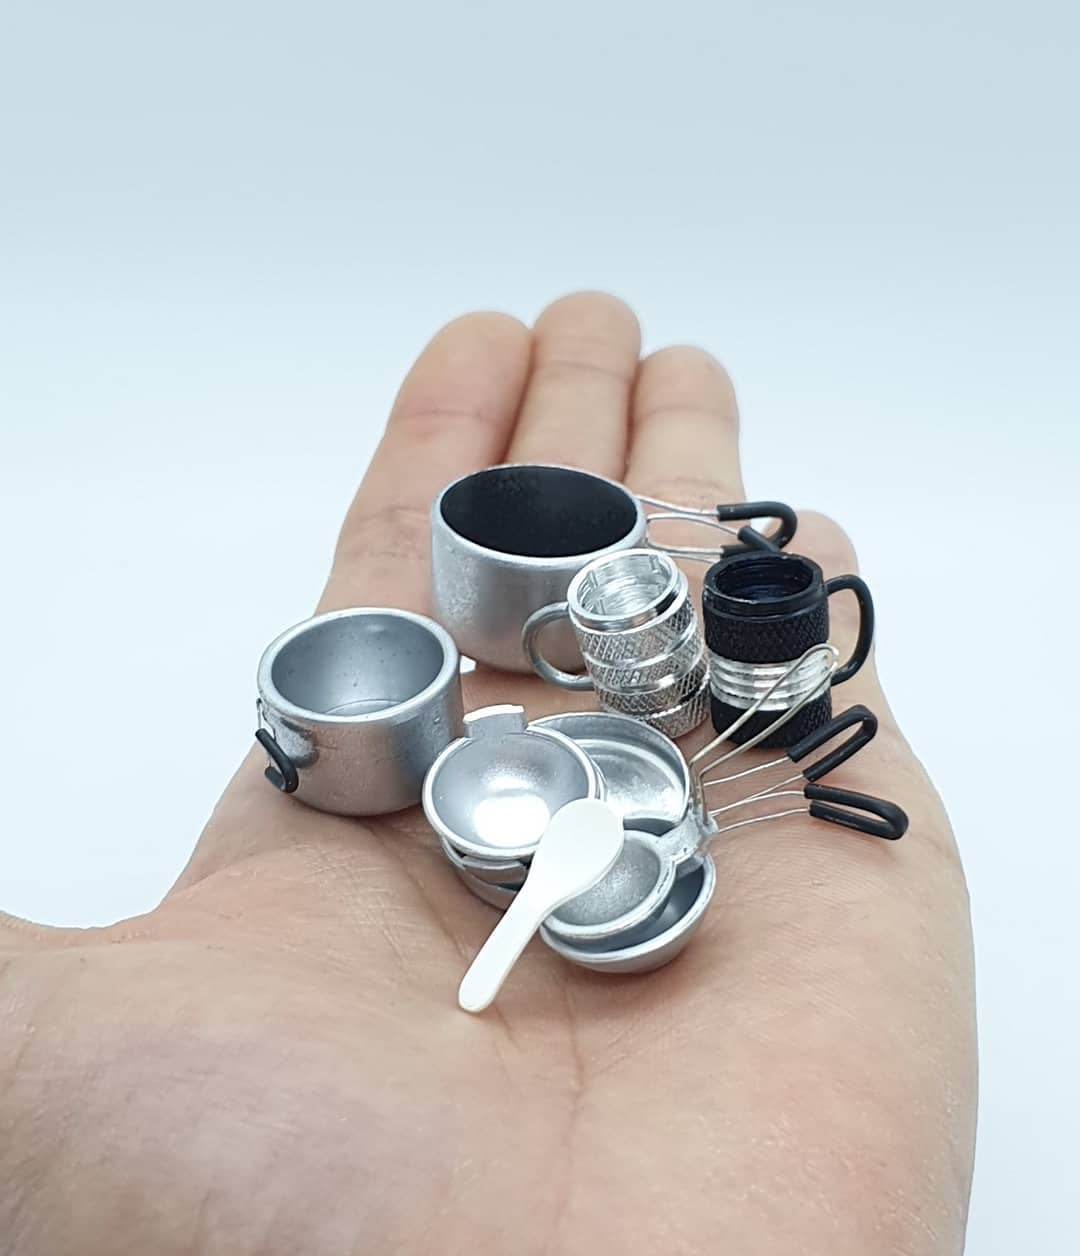 18 sculpture miniature utensils sunny miniworld